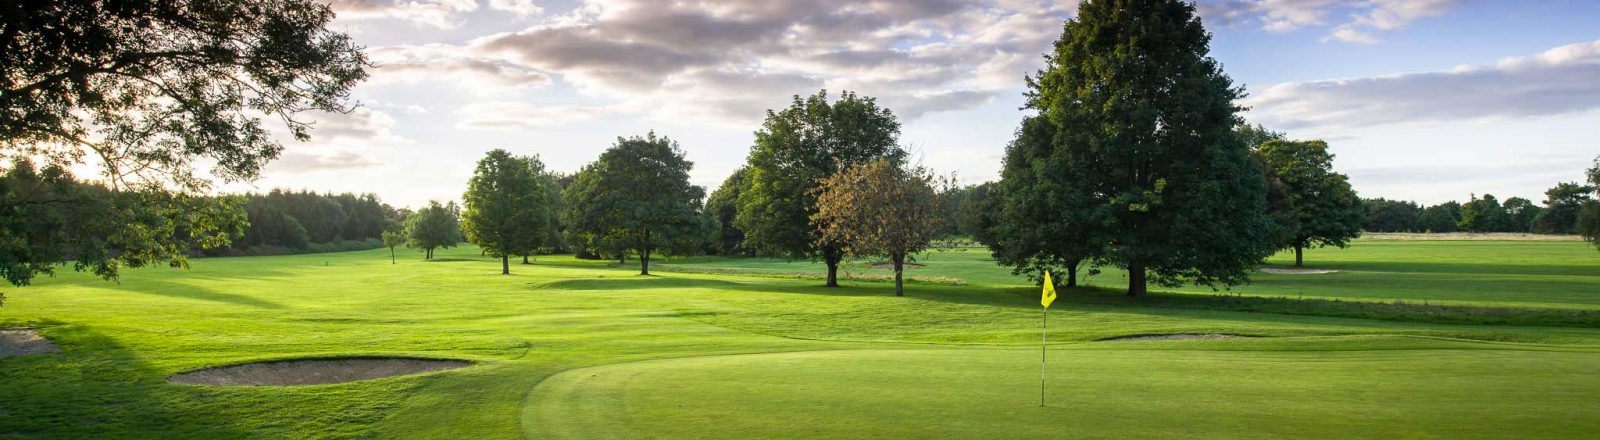 Redbourn Golf Club green at evening